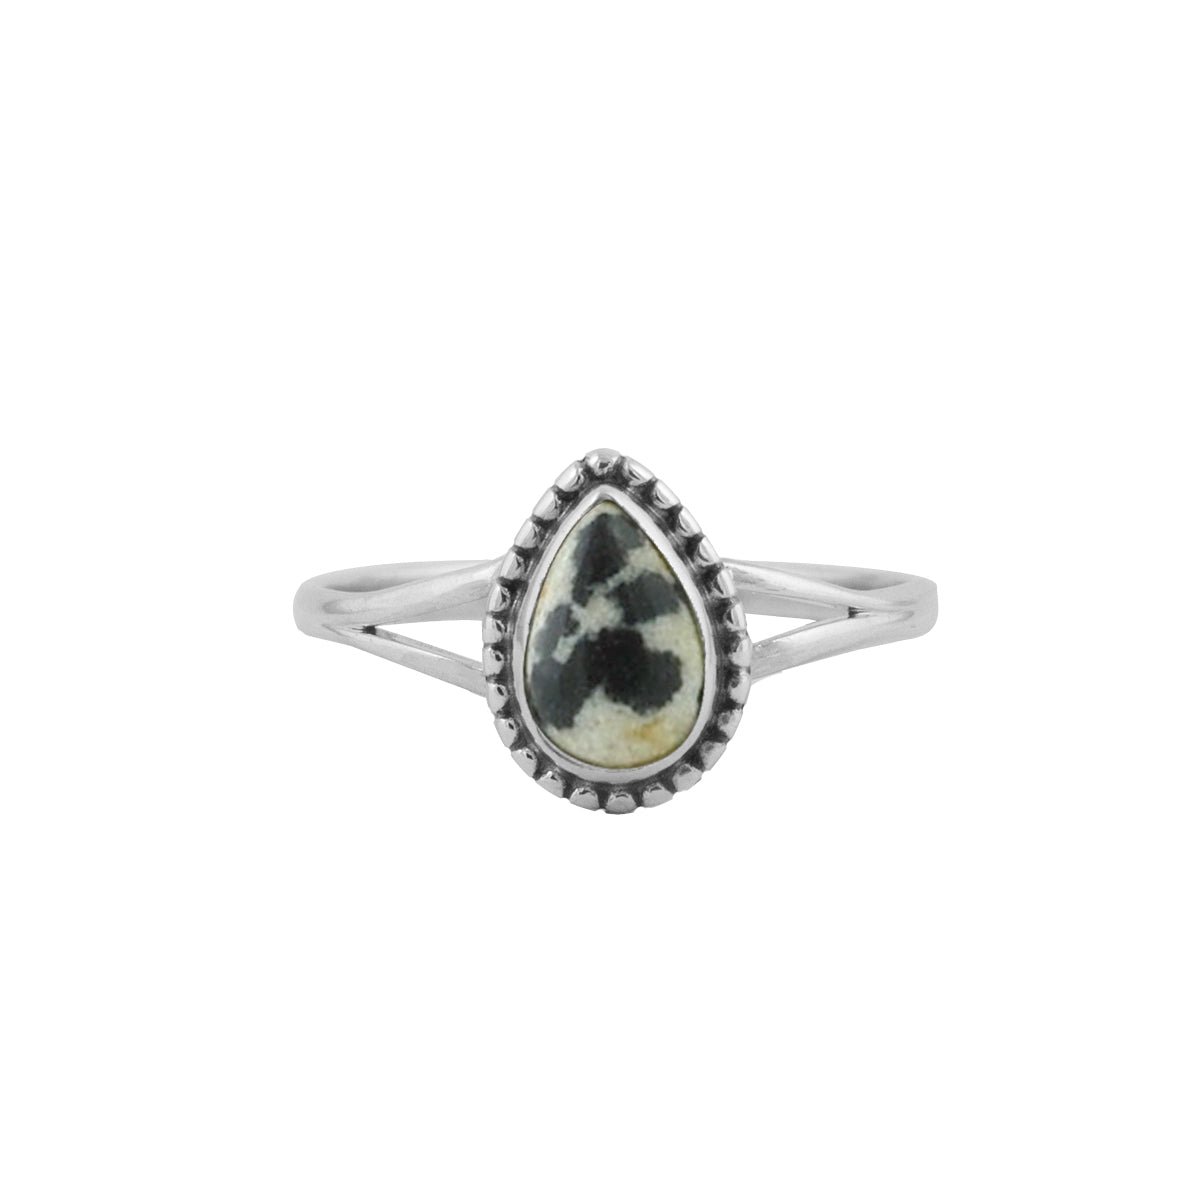 Jewelryz | Licia | Ring 925 zilver met dalmatiër jaspis | 16.00 mm / maat 50